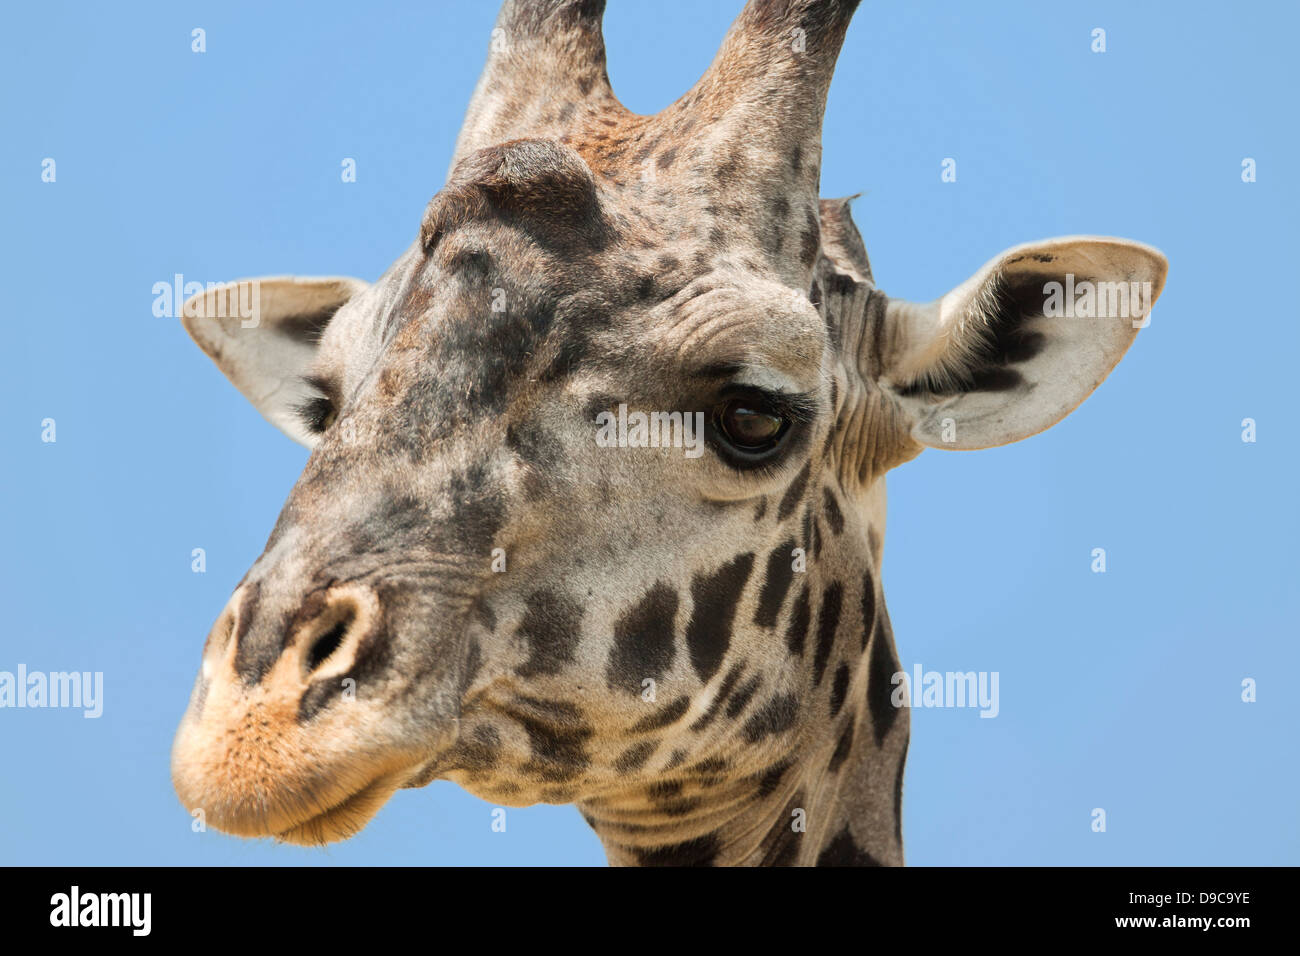 Giraffe close-up portrait, Masai Mara, Kenya Stock Photo